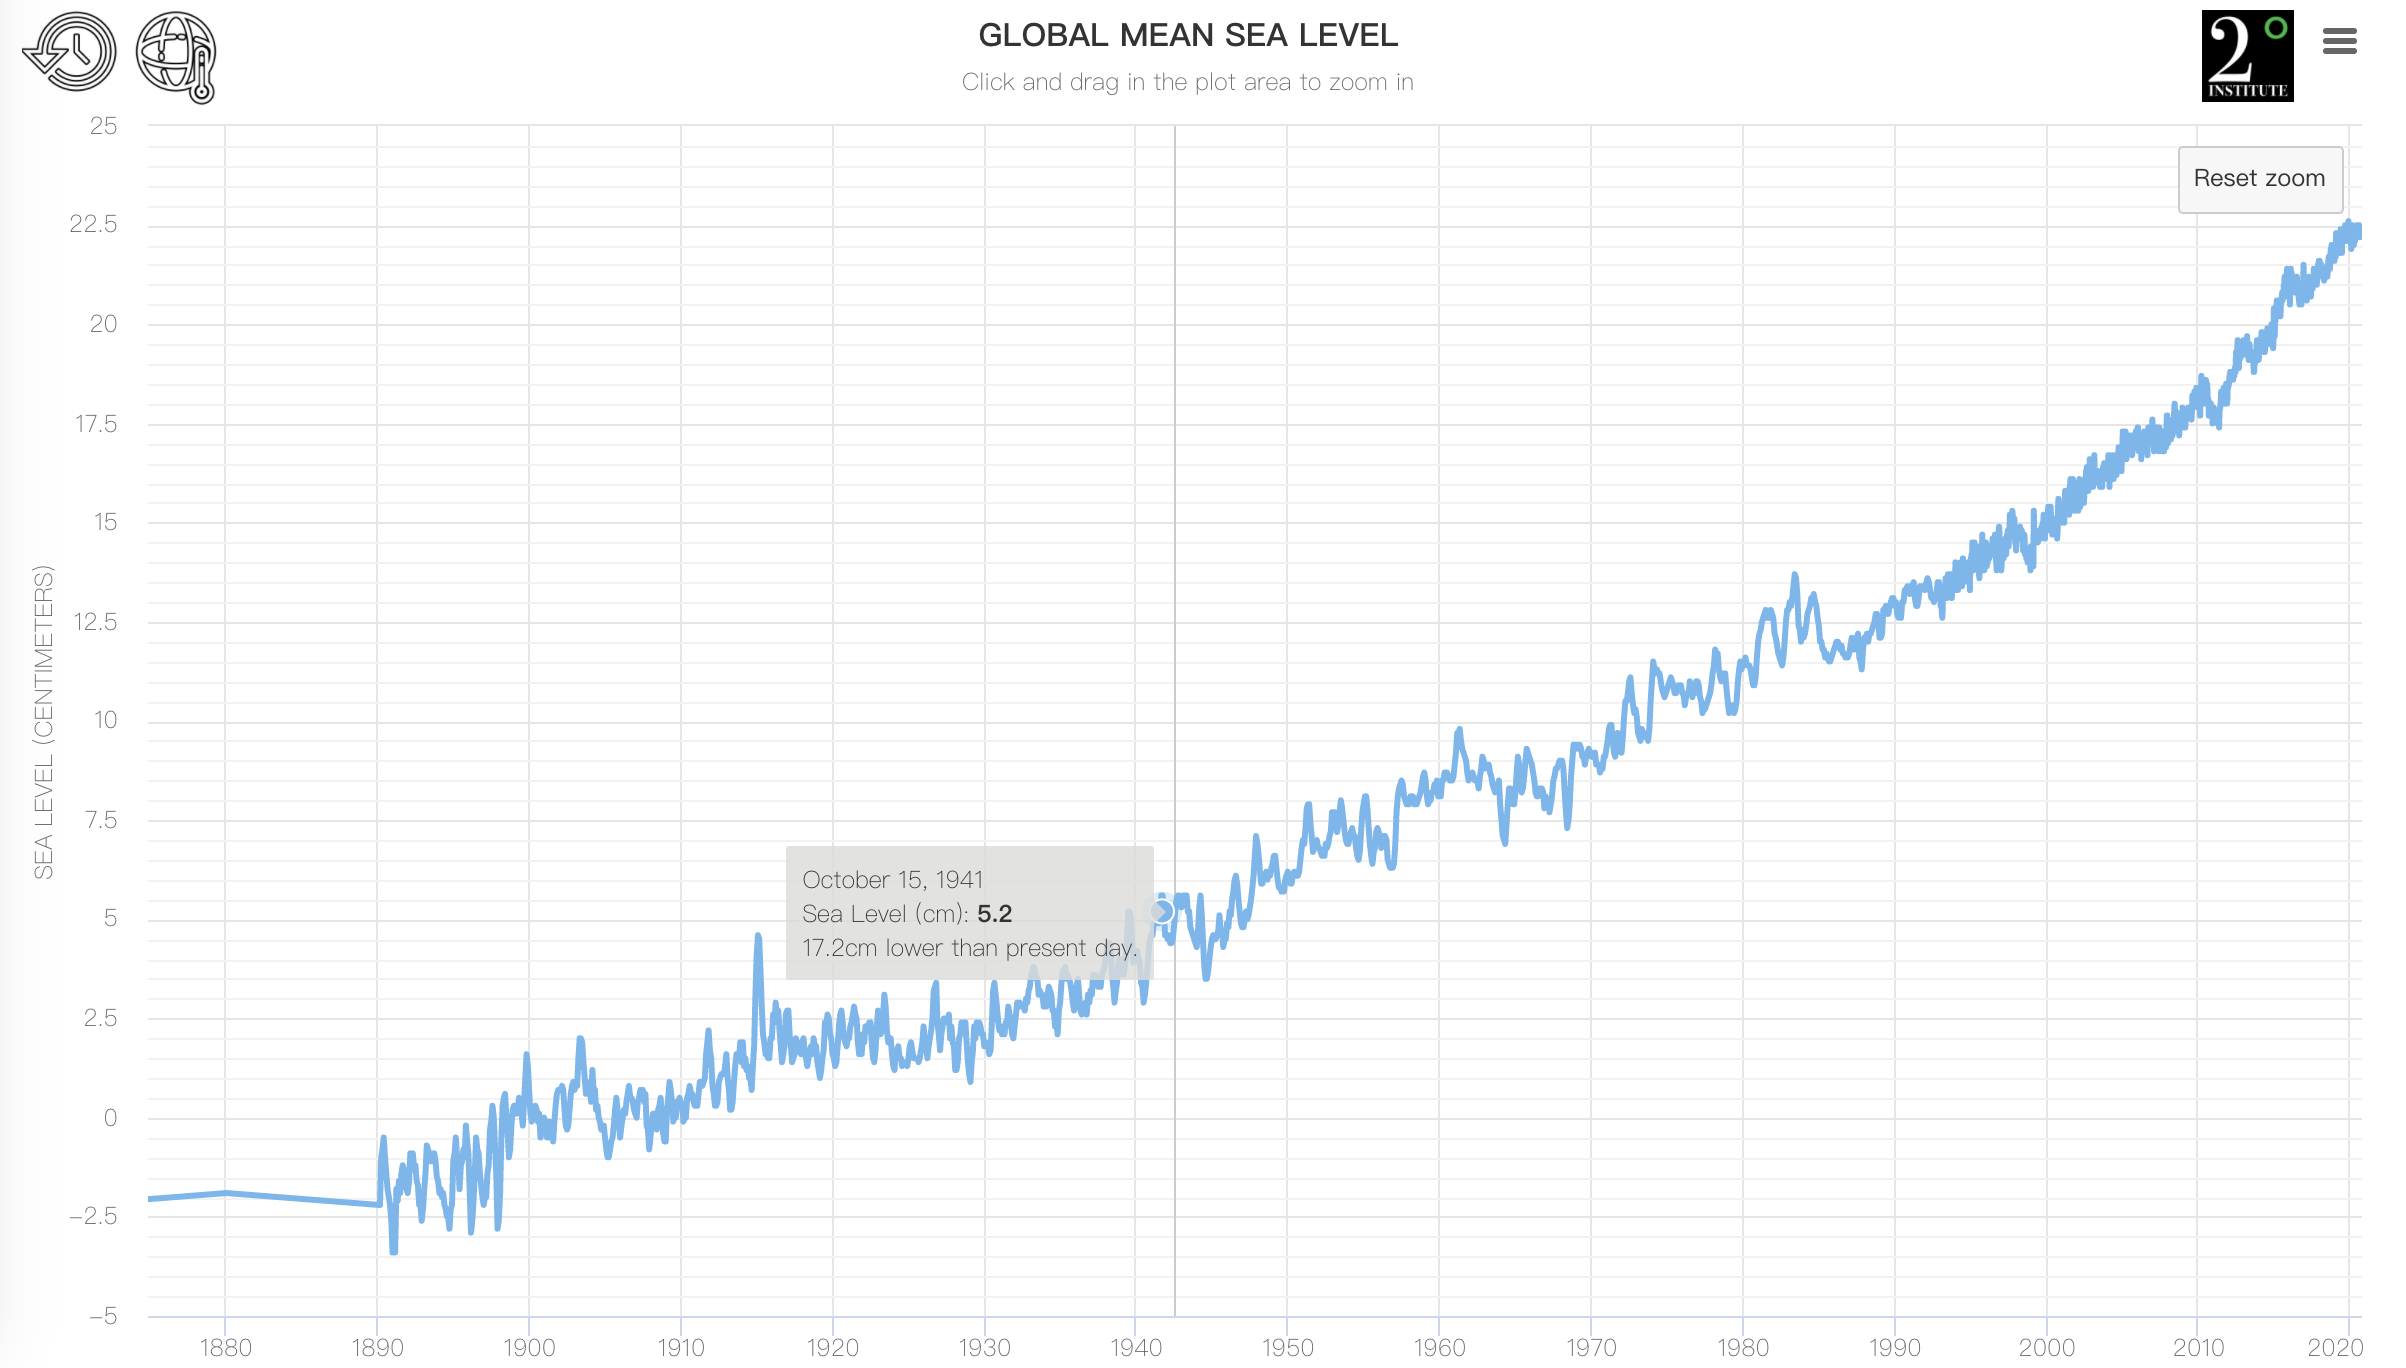 Global Mean Sea Level